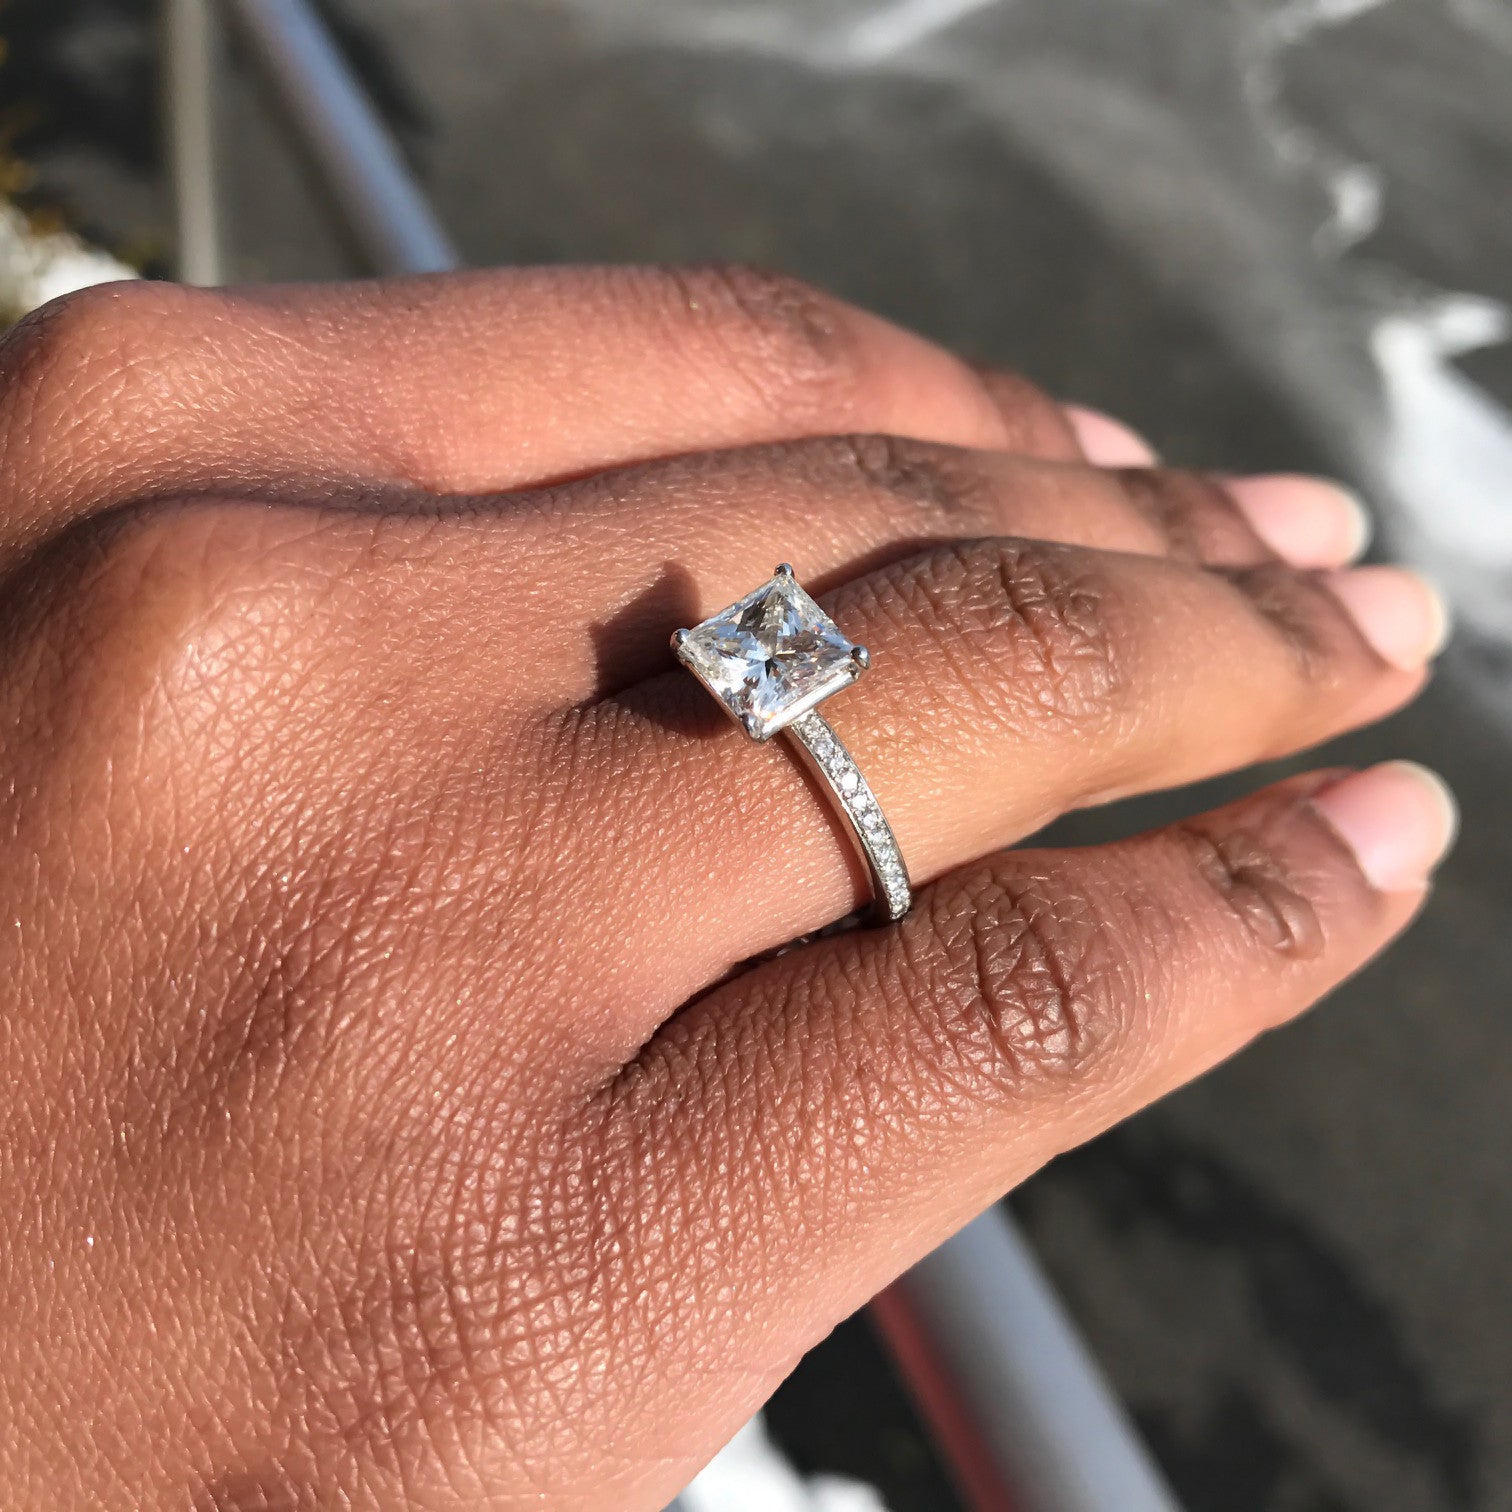 Dazzling 1.47 carat princess cut diamond ring